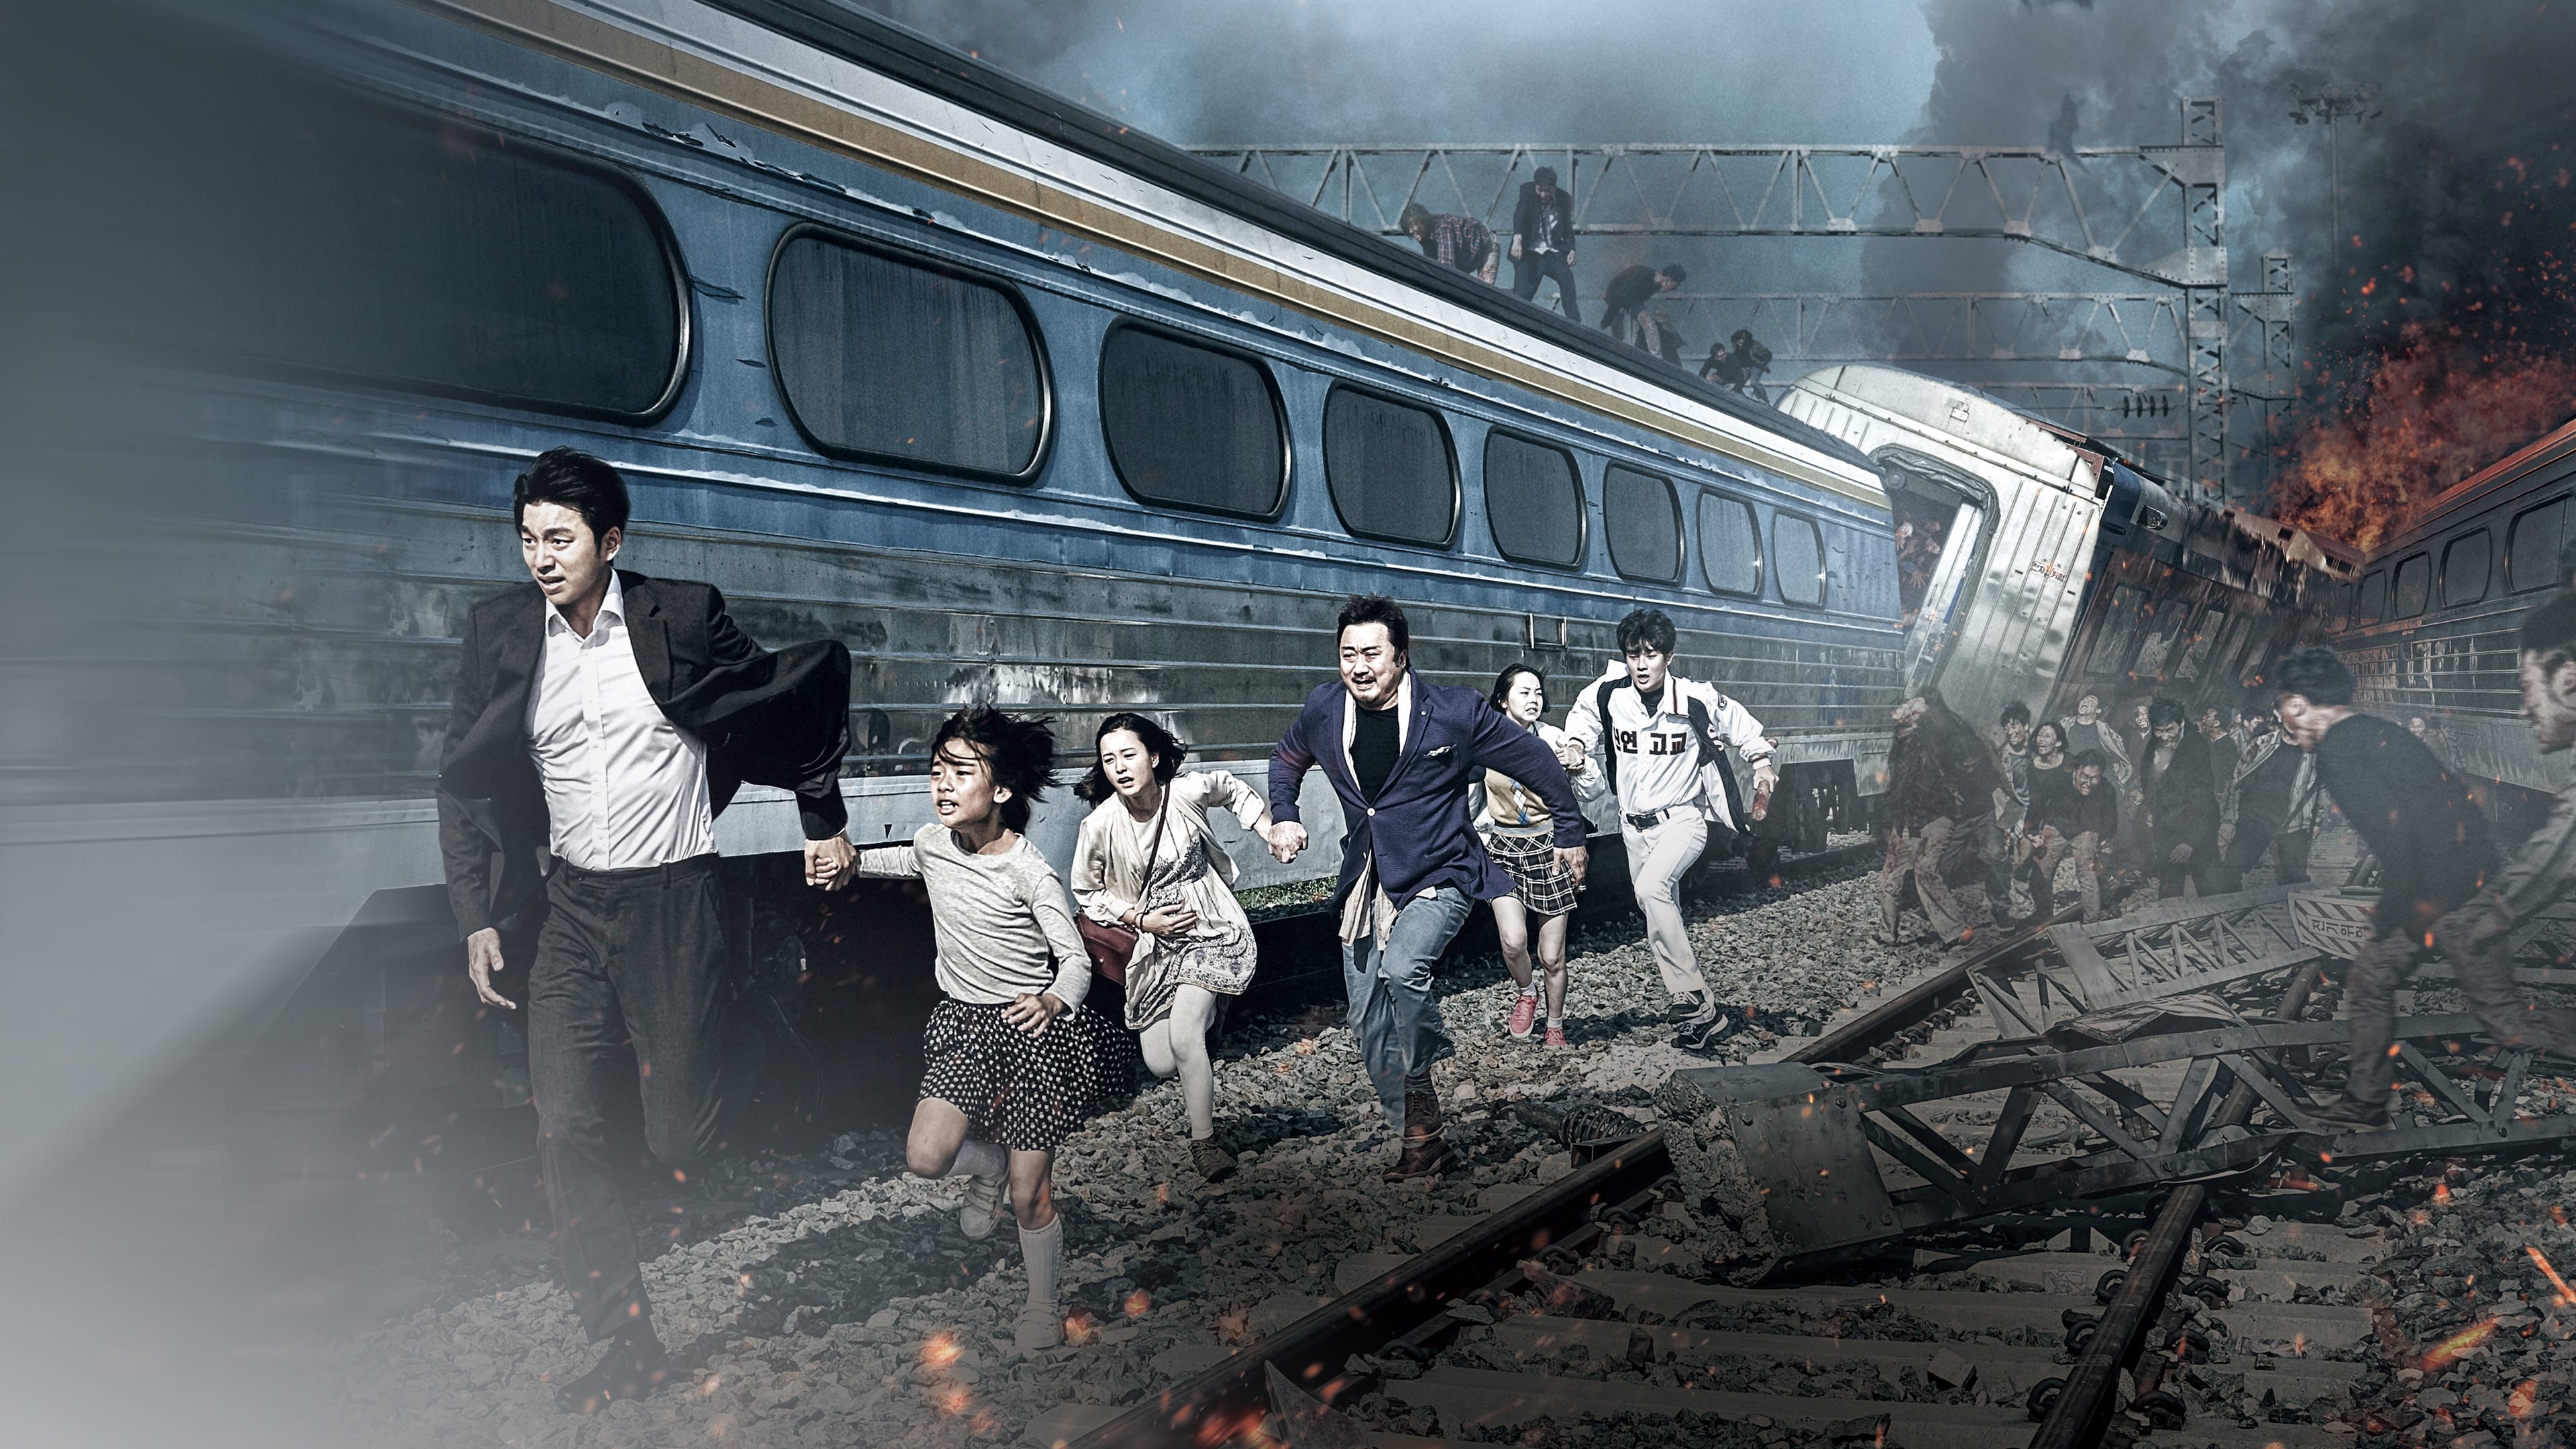 Image du film Dernier Train pour Busan akisit8ir0uhhd4yrhdzpk4b6ysjpg